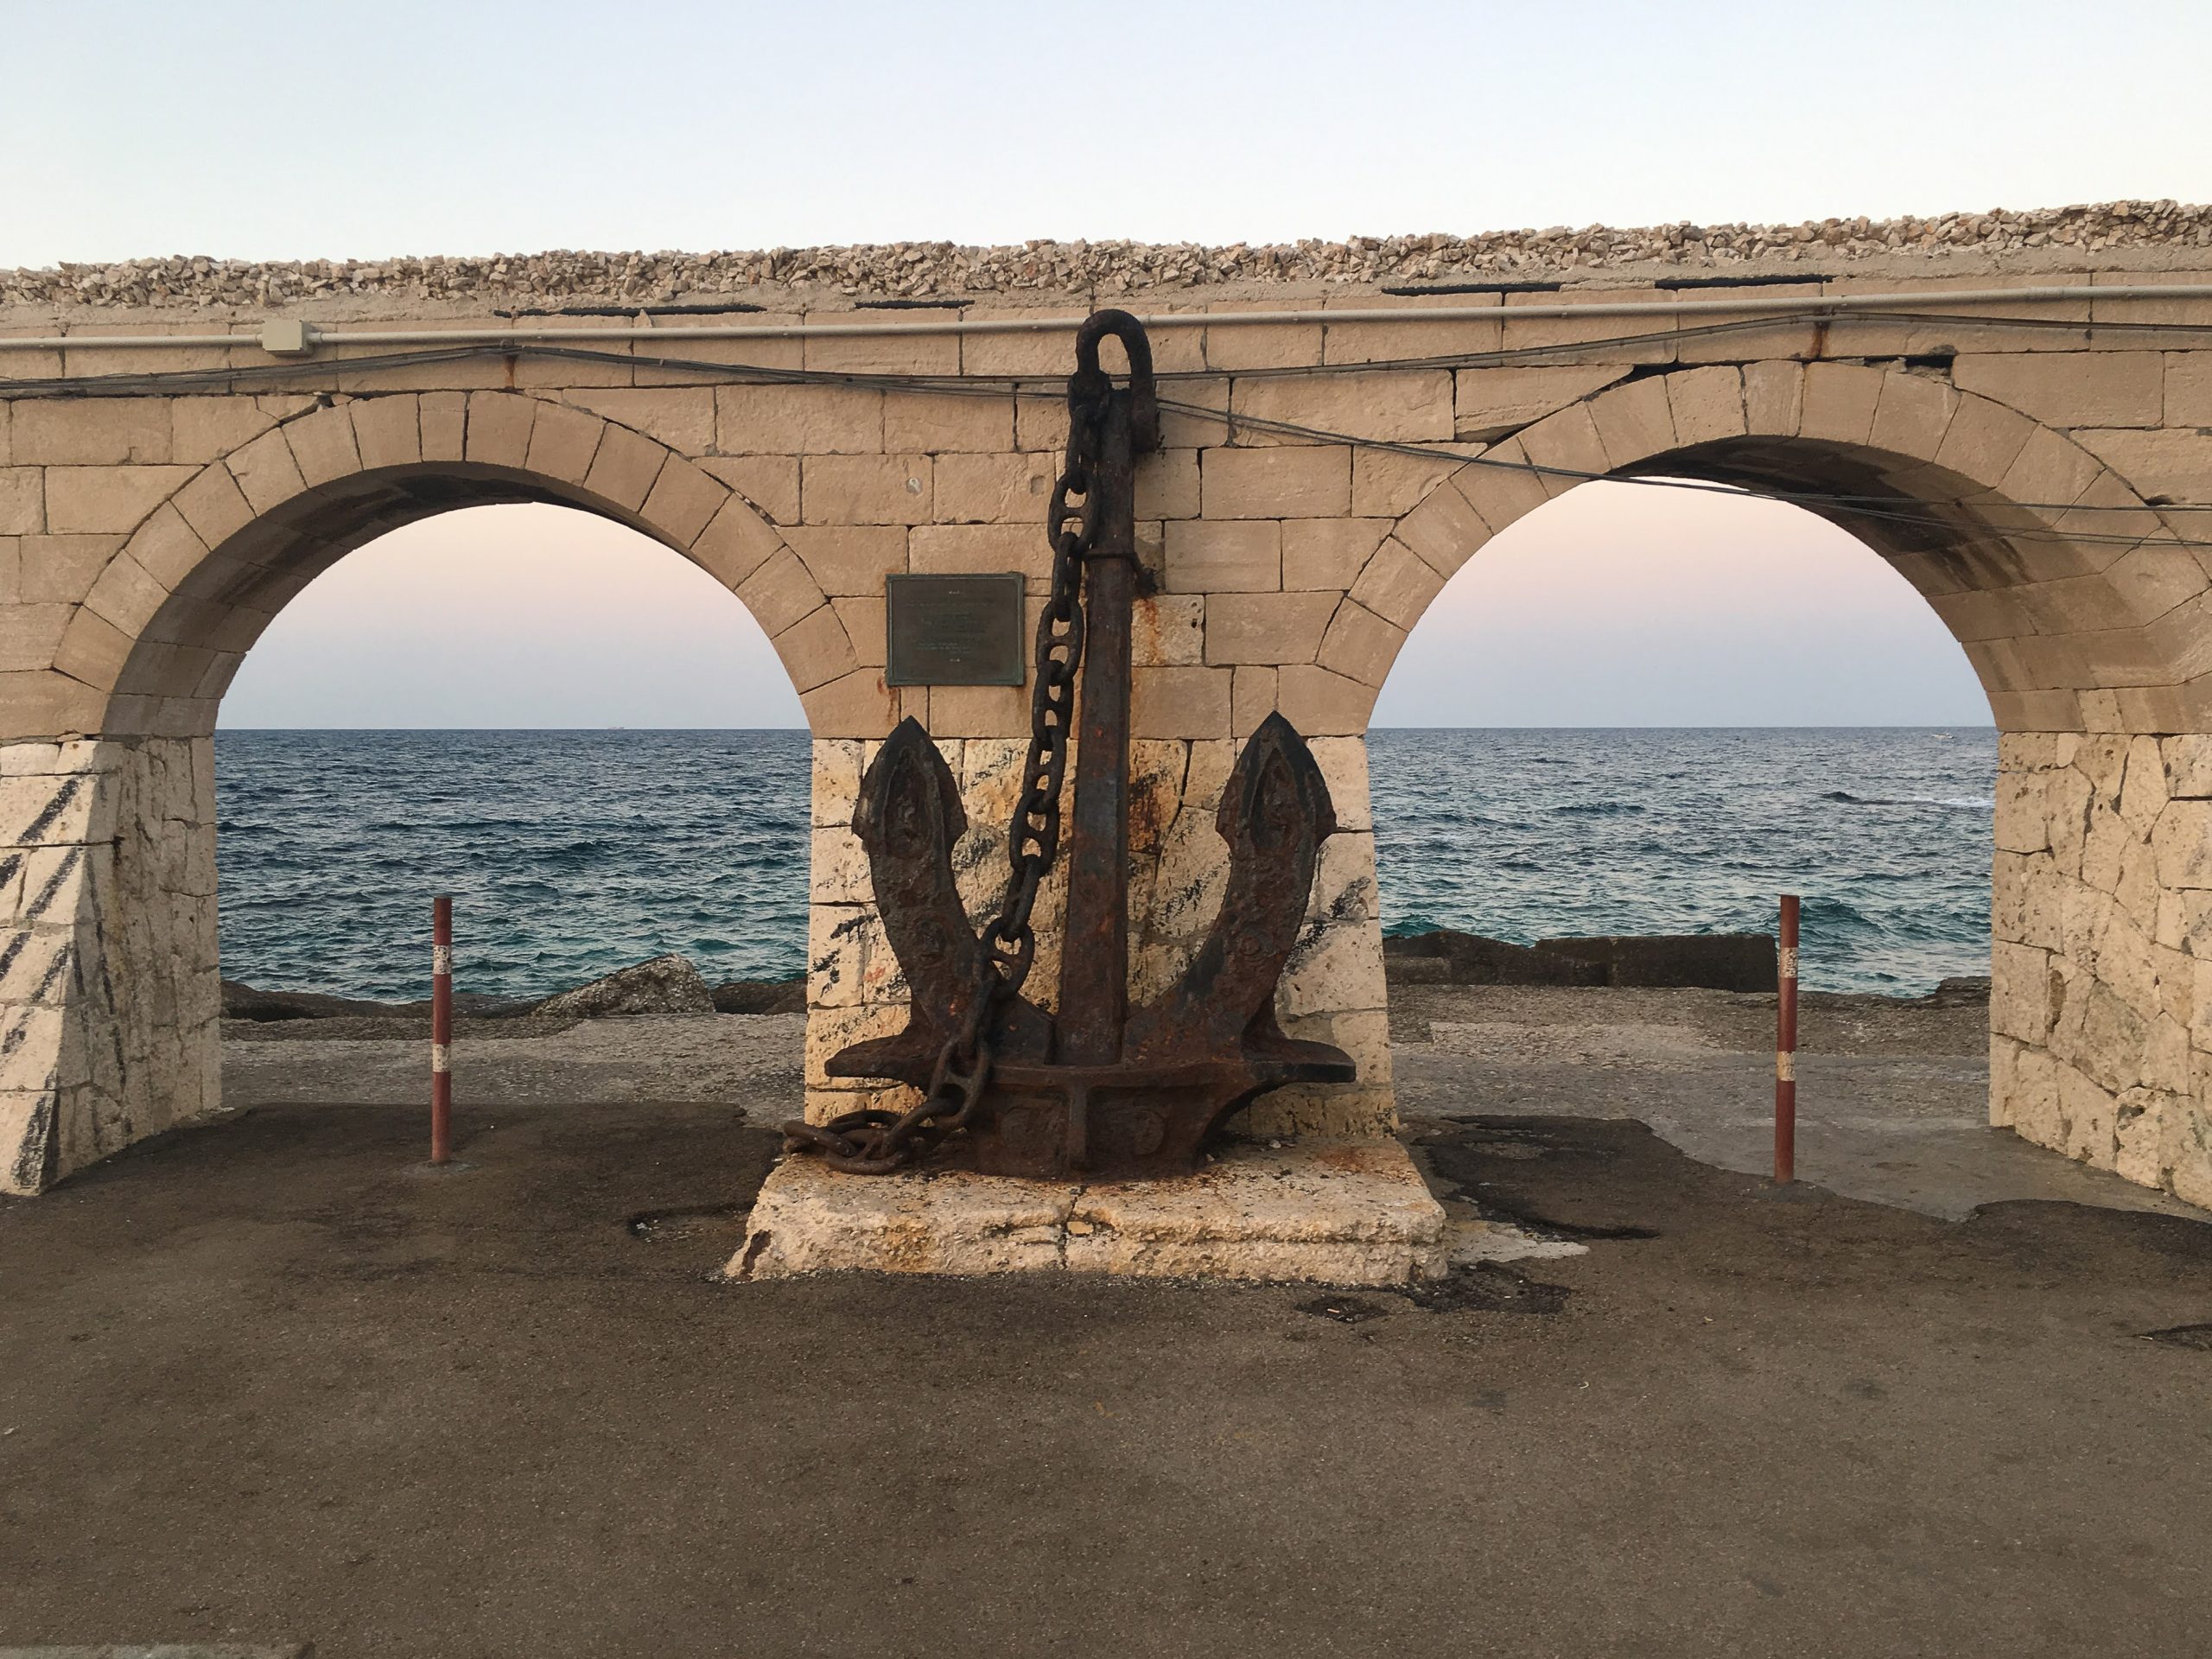 Otranto: Charm and Farewell to Italy